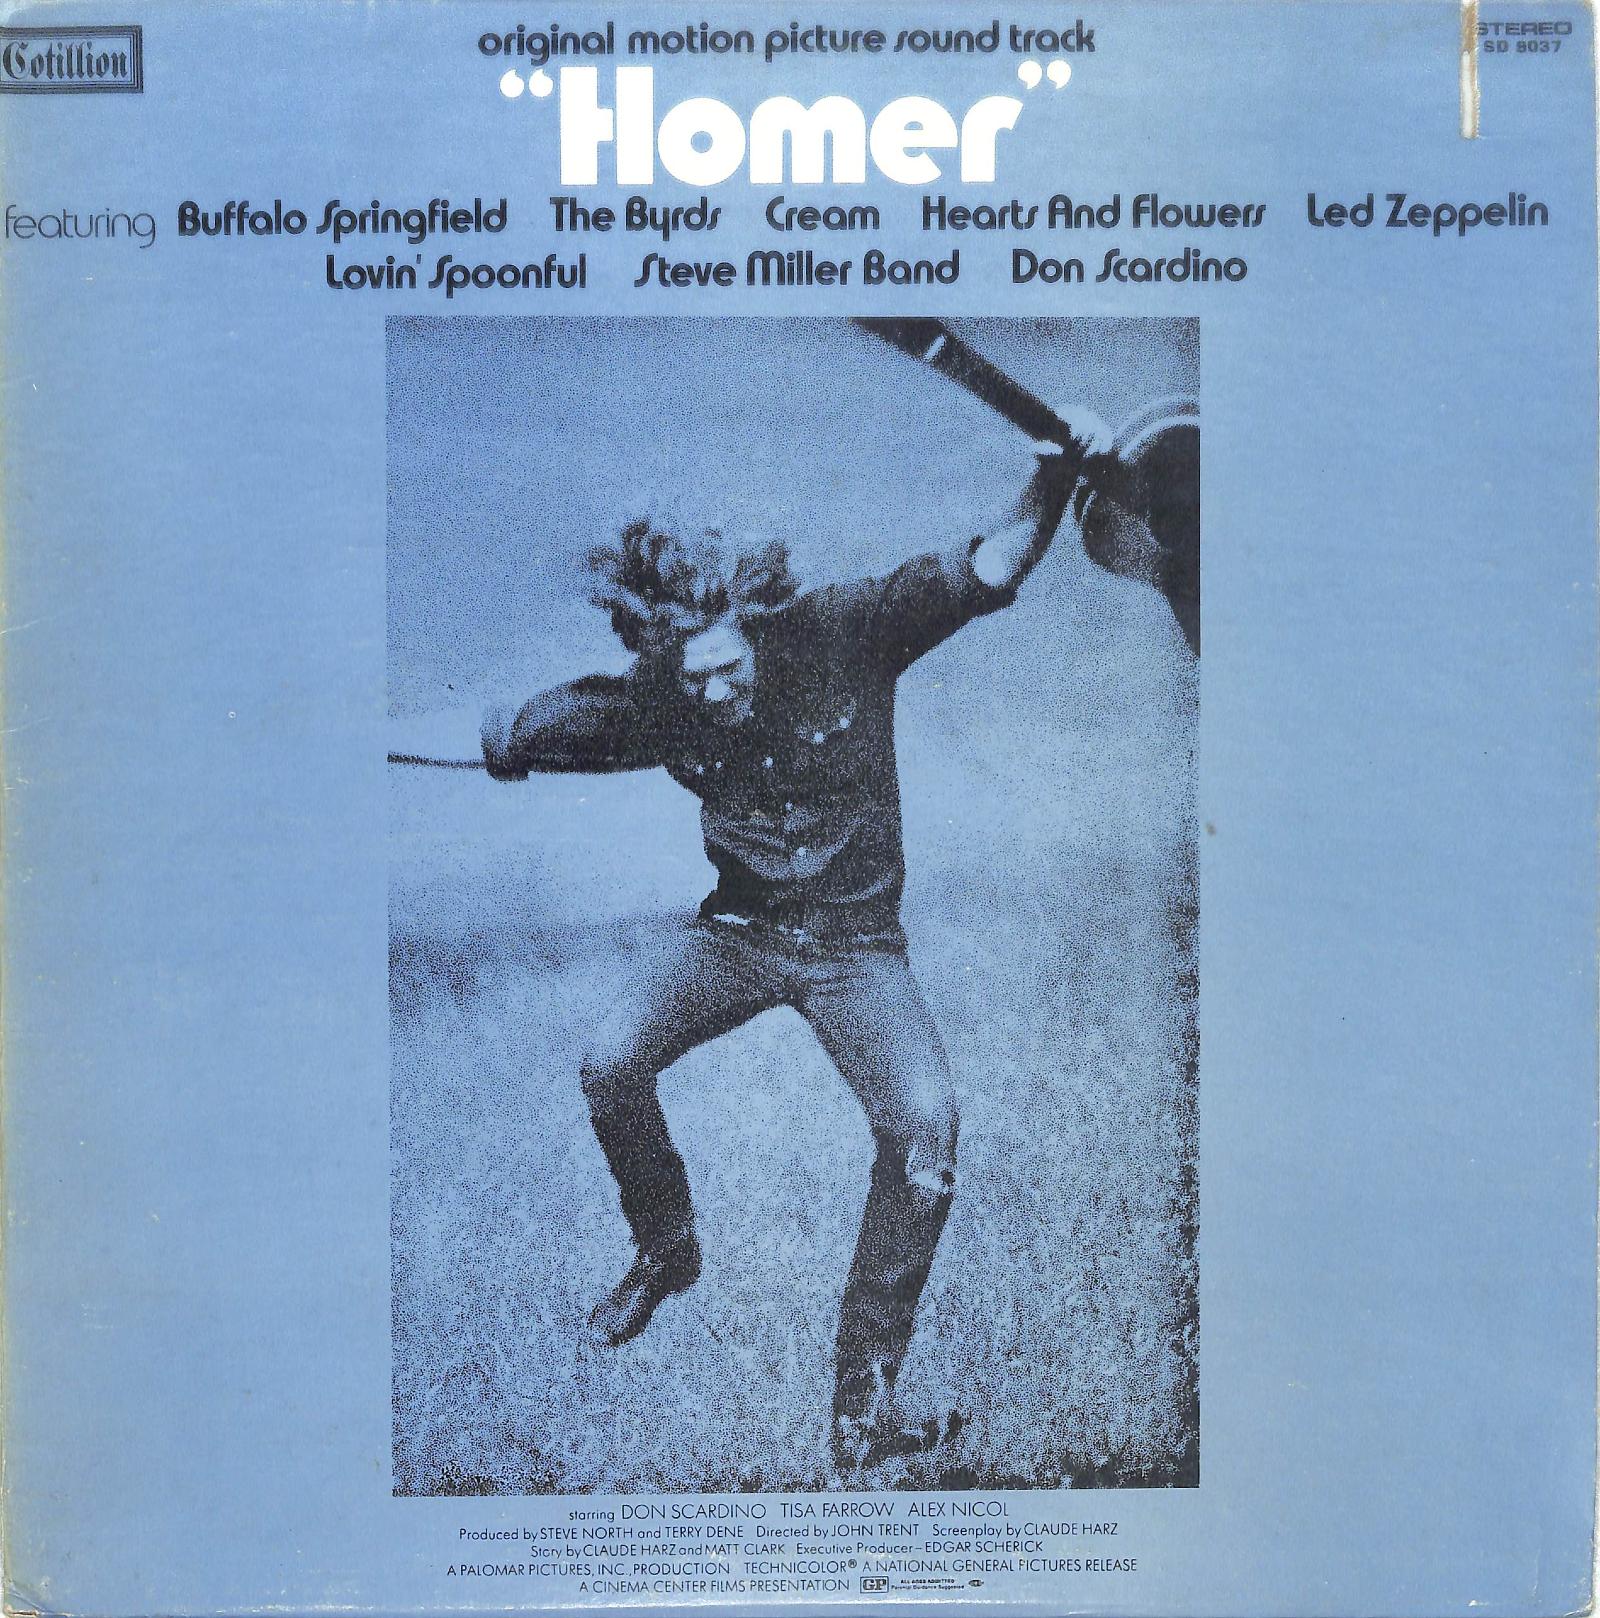 VA - Original Motion Picture Sound Track "Homer"